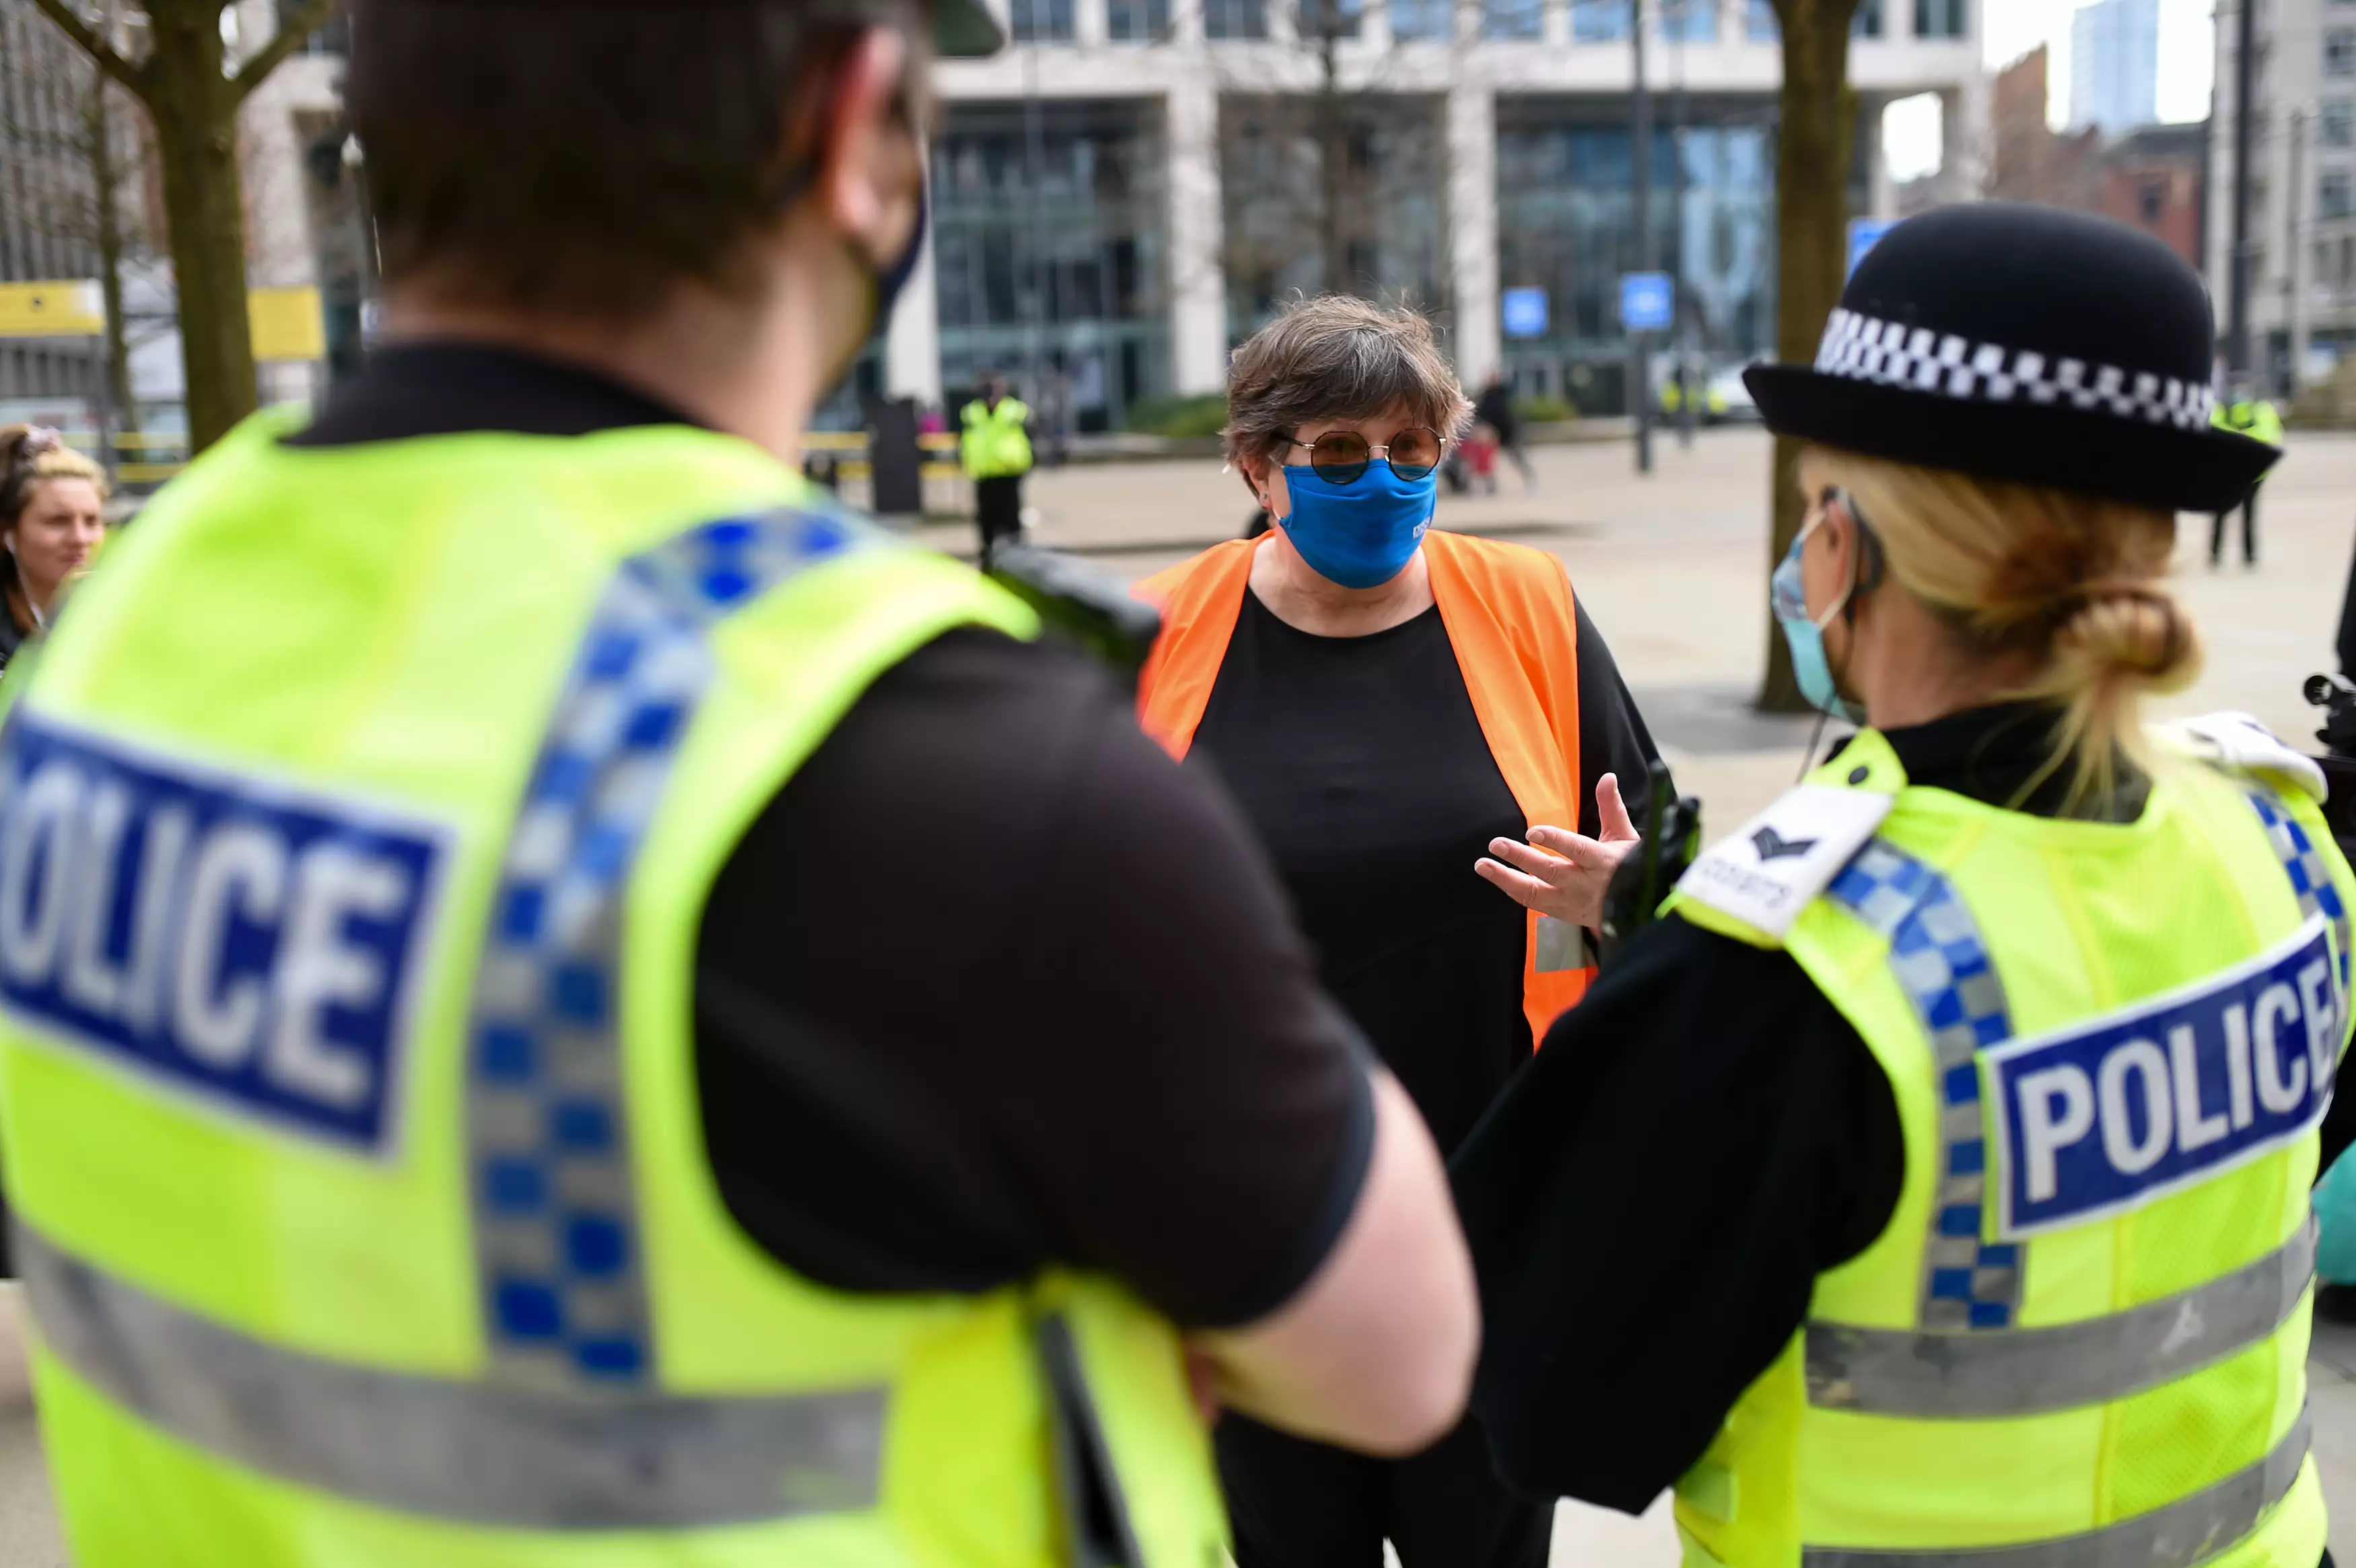 Police speak to NHS worker Karen Reissmann after breaking up the protest in Manchester.